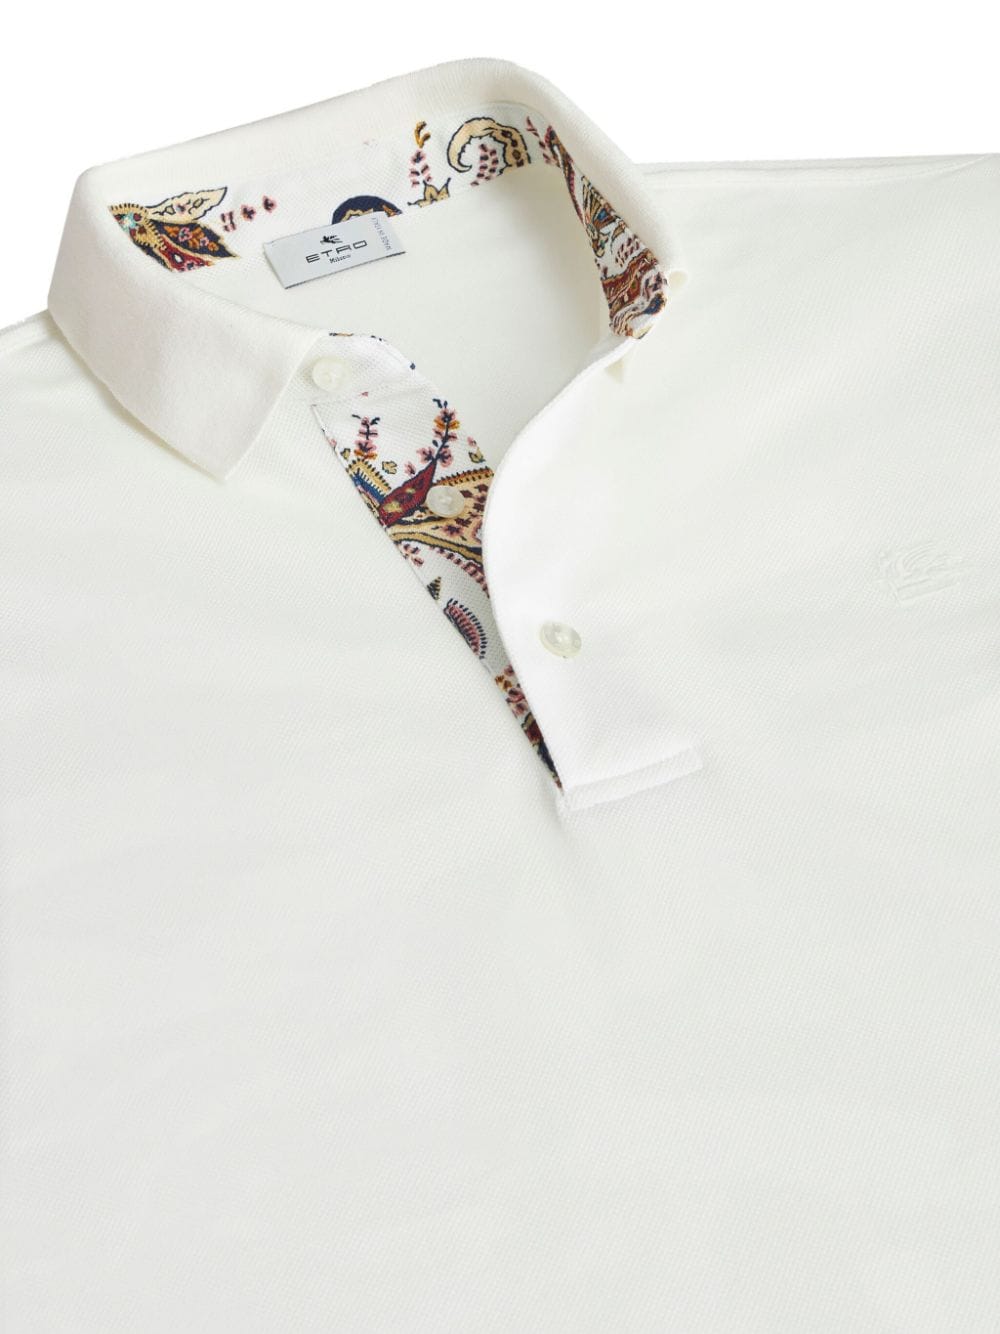 Pegaso-embroidered cotton polo shirt<BR/><BR/><BR/>